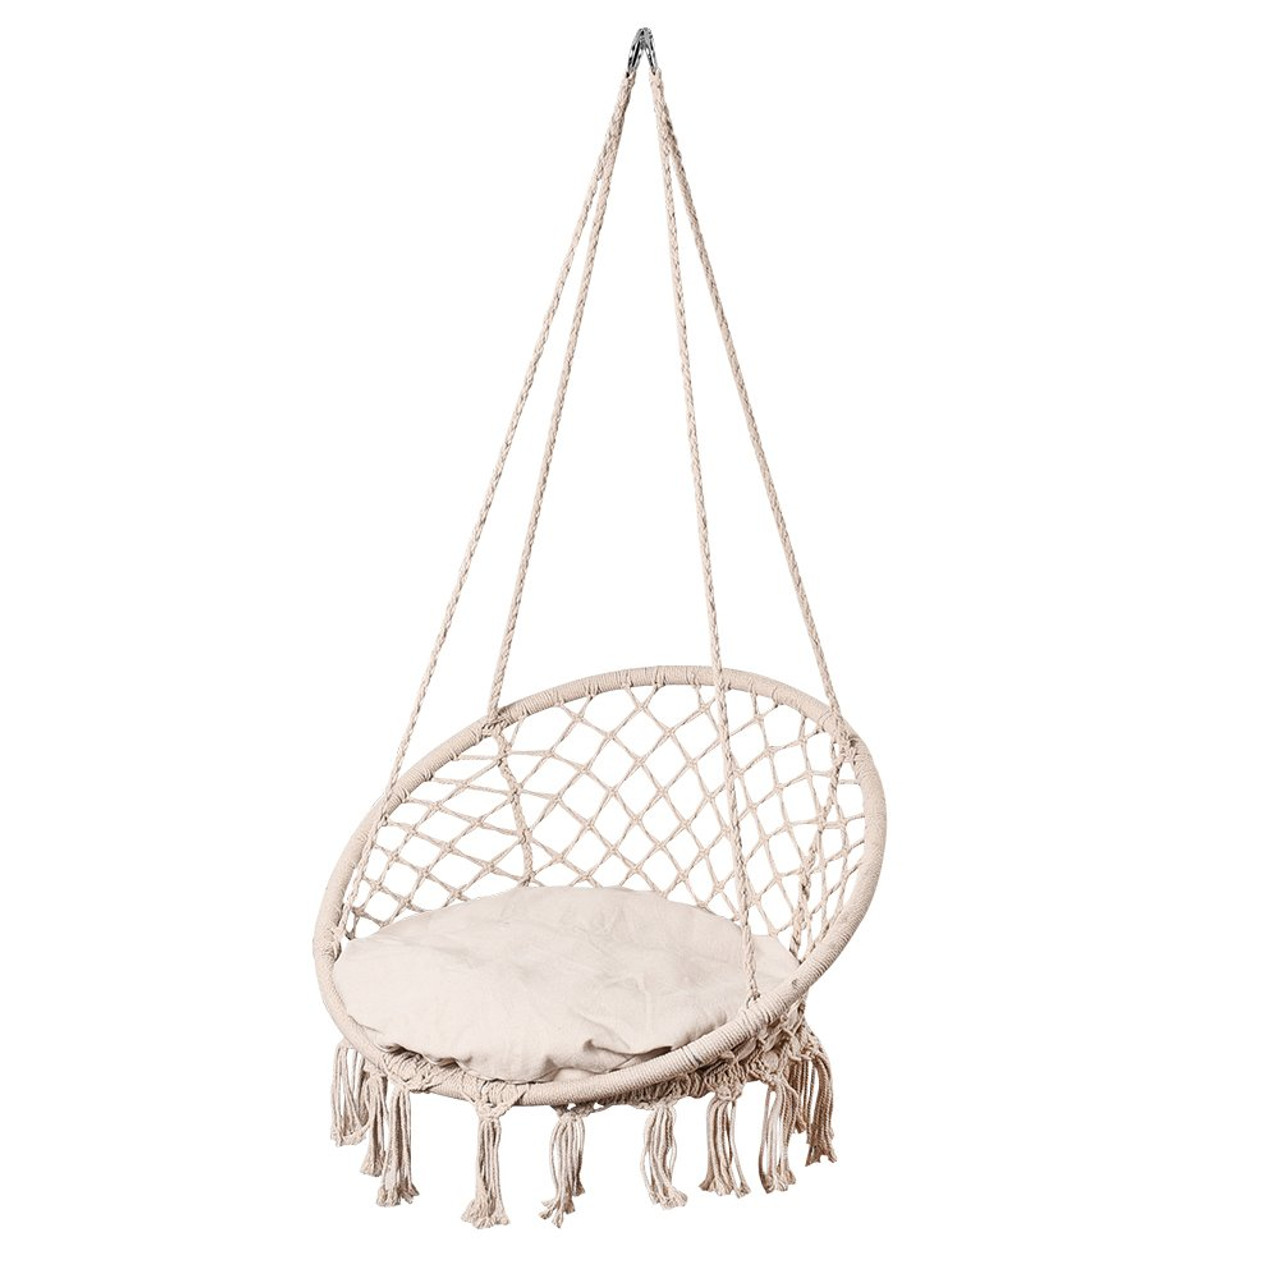 Lazy Daze Hammocks Handwoven Cotton Rope Hammock Chair Macrame